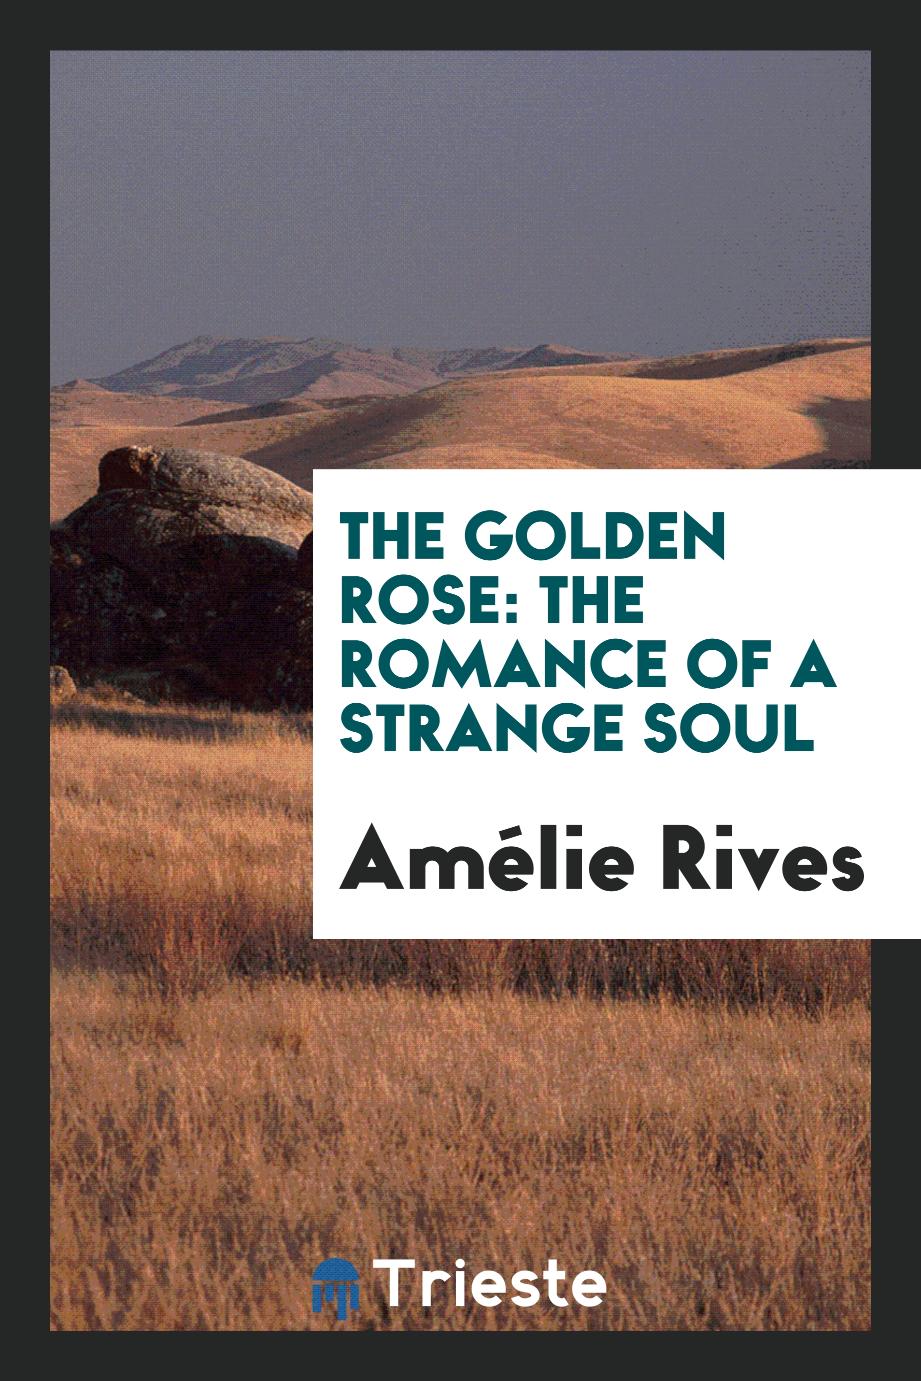 The golden rose: the romance of a strange soul